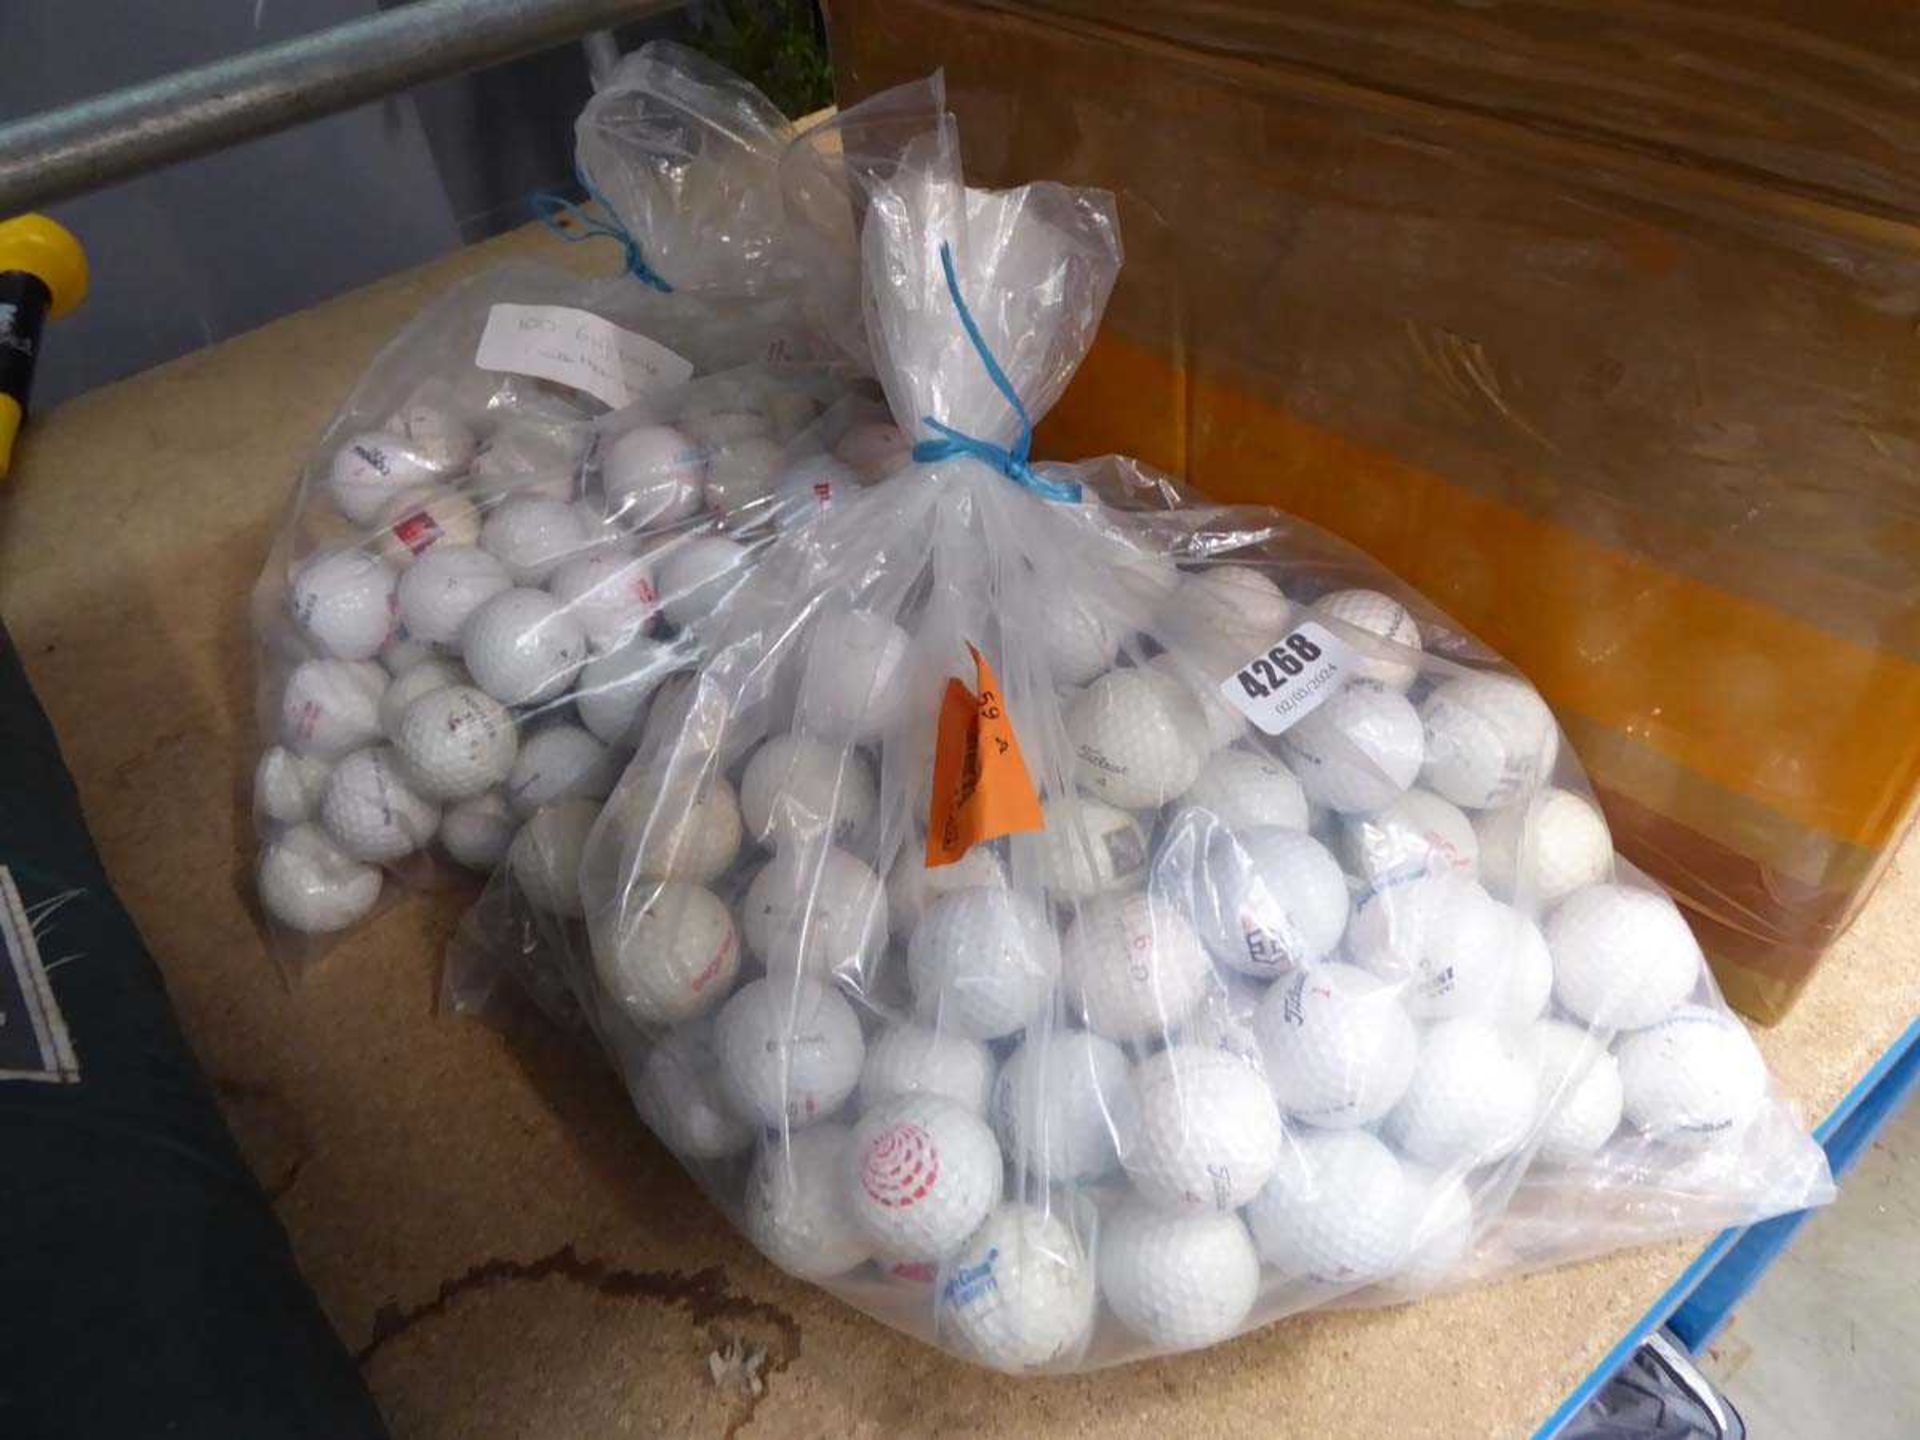 2 bags of golf balls